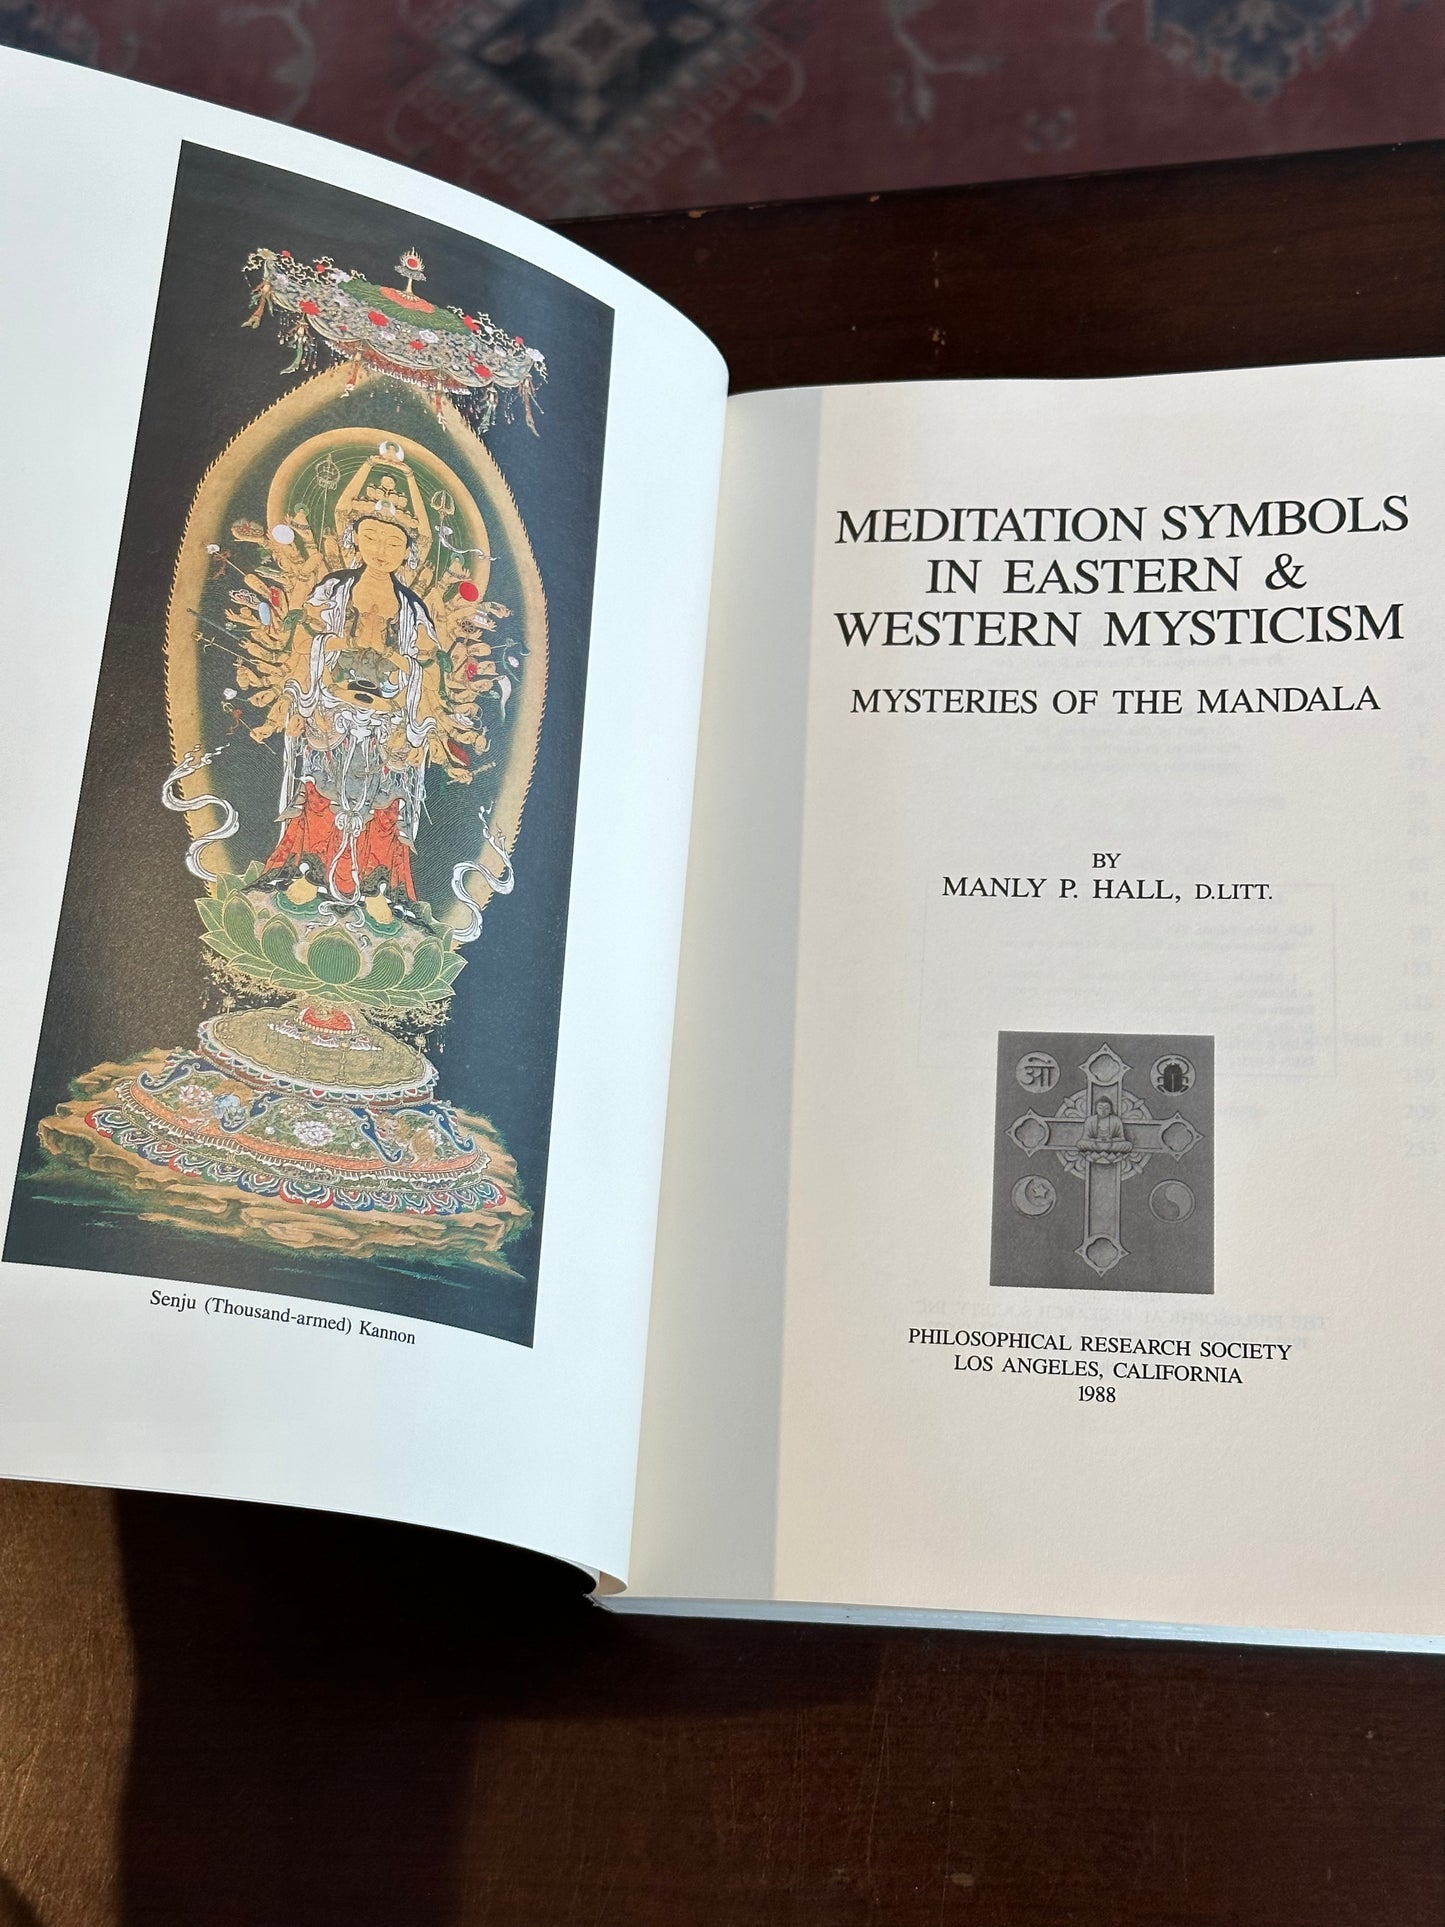 Meditation Symbols in Eastern & Western Mysticism by Manly P. Hall